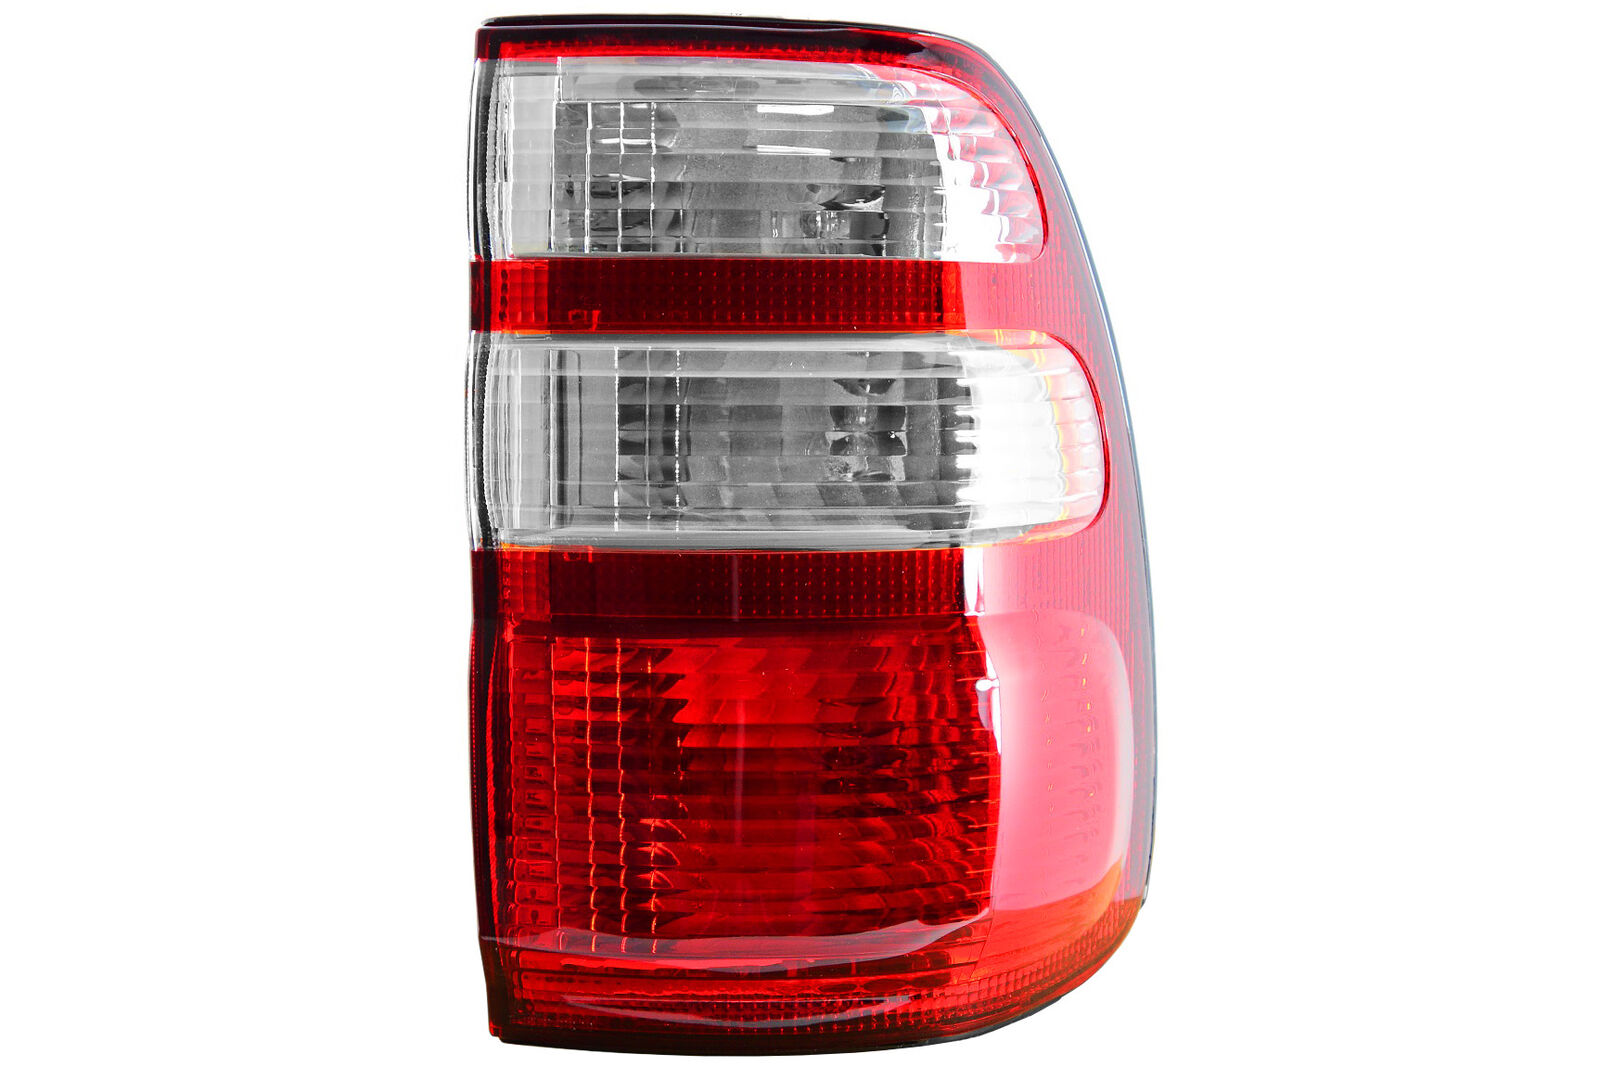 Aftermarket RHD LHD Rear Right Light Halogen For Toyota LAND CRUISER AMAZON